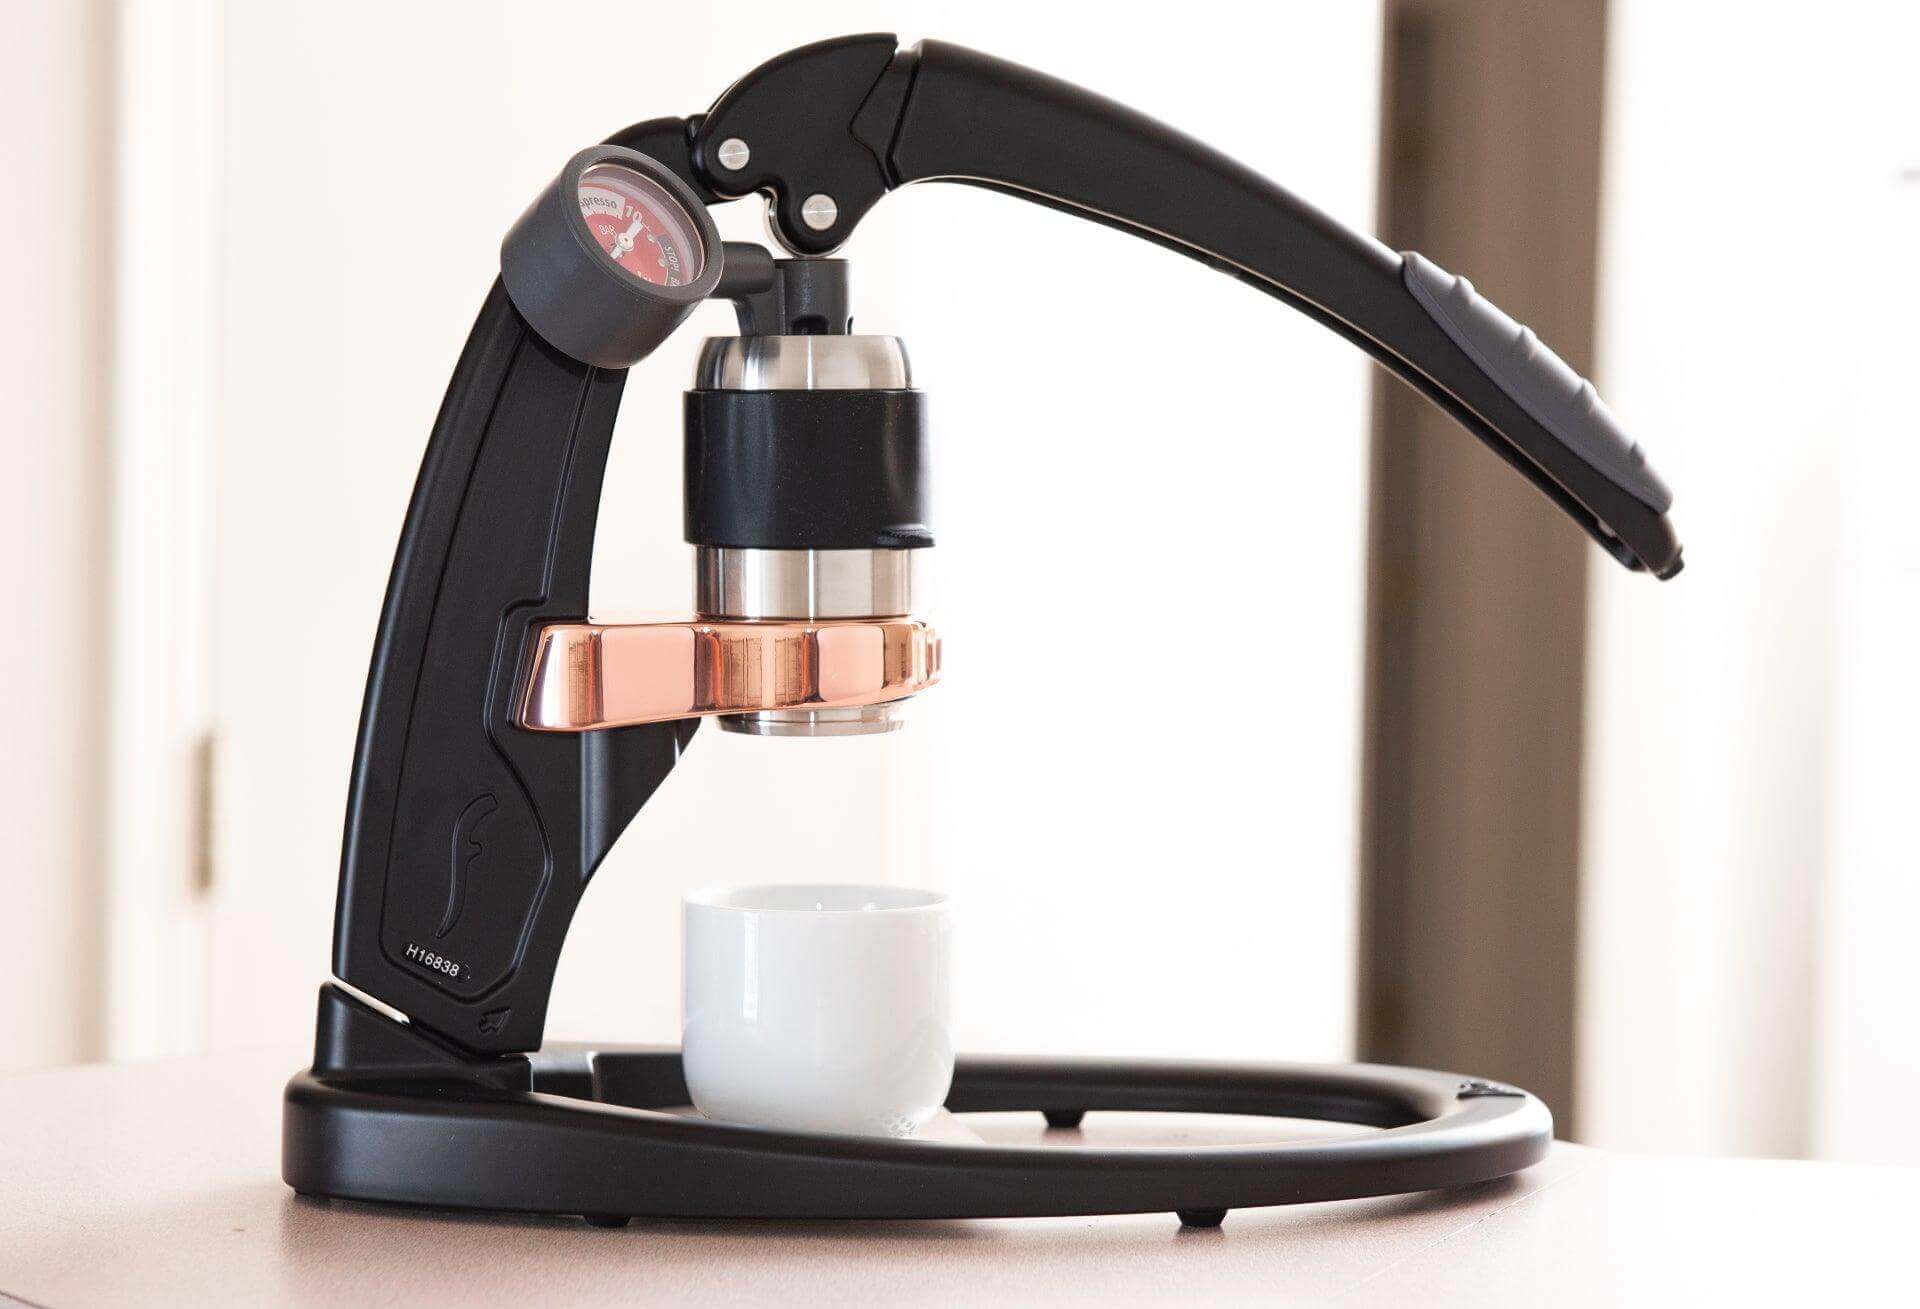 Flair Pro2 - the top portable espresso maker.